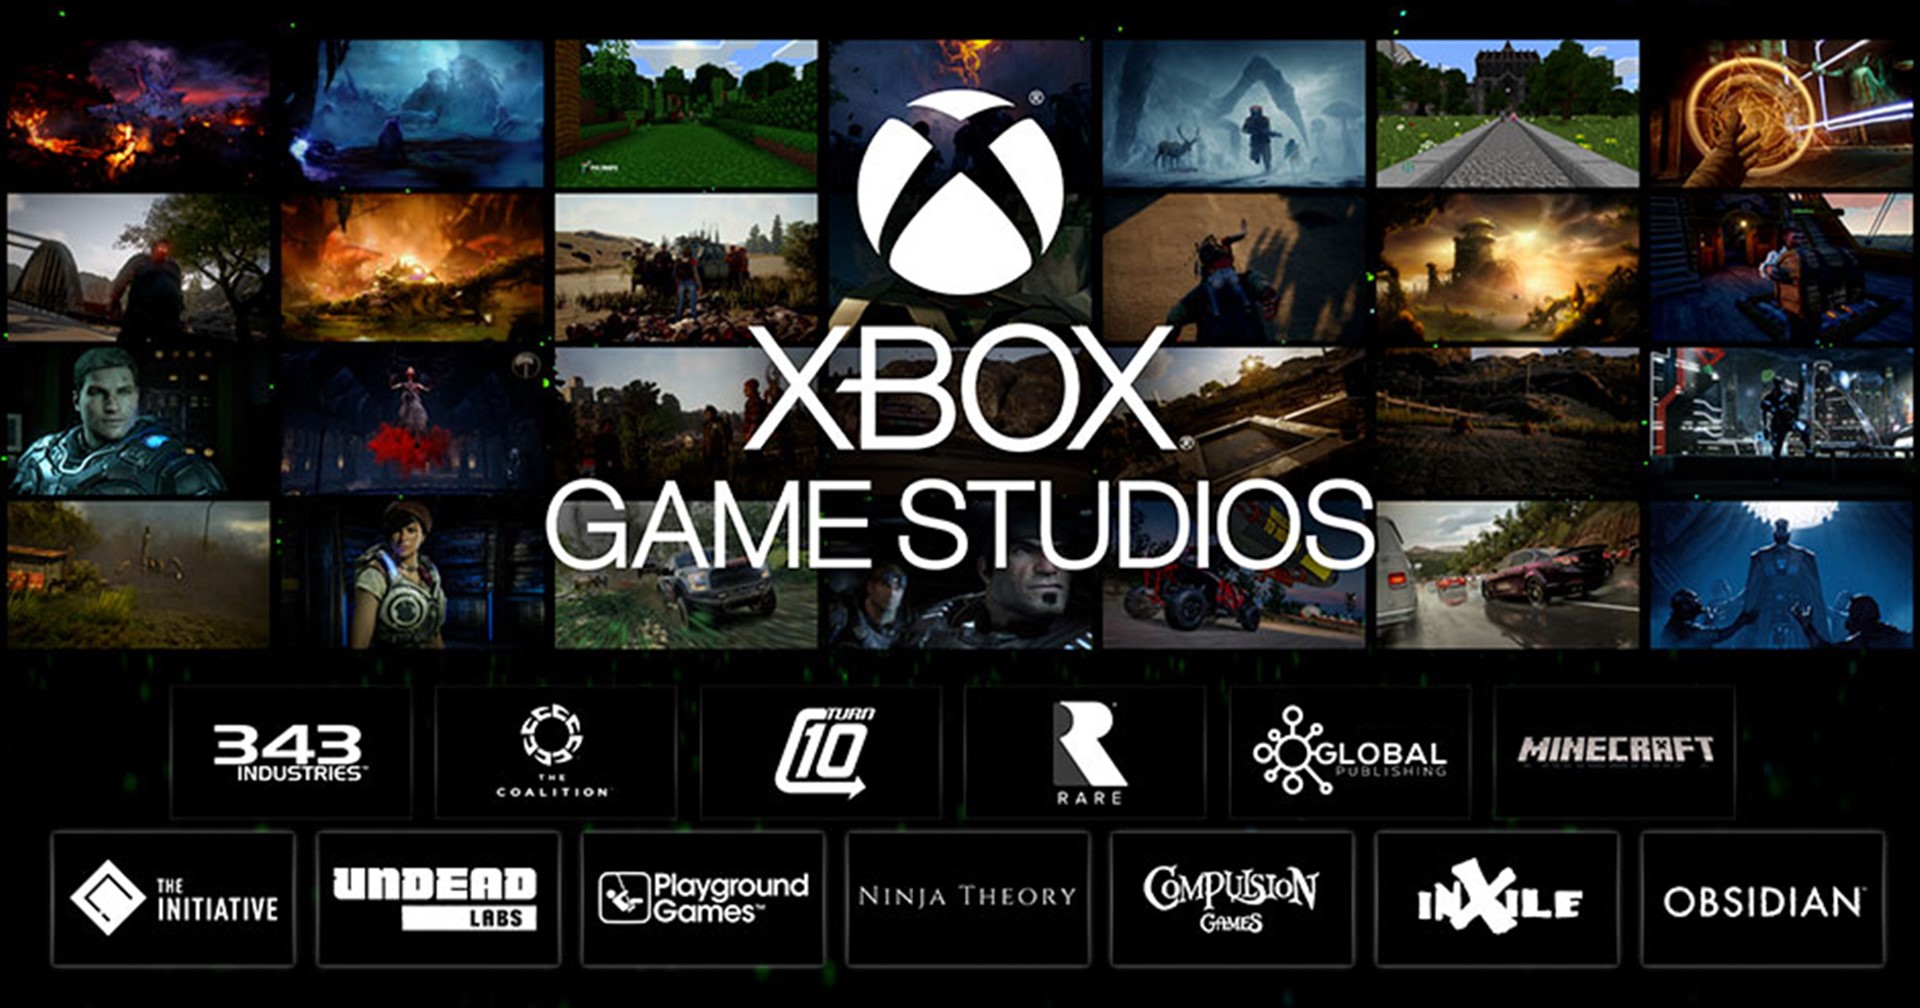 Microsoft เตรียมปรับระบบสร้างเกมใหม่ เพื่อให้ผลงานมีคุณภาพเท่ากับ Sony และ Nintendo